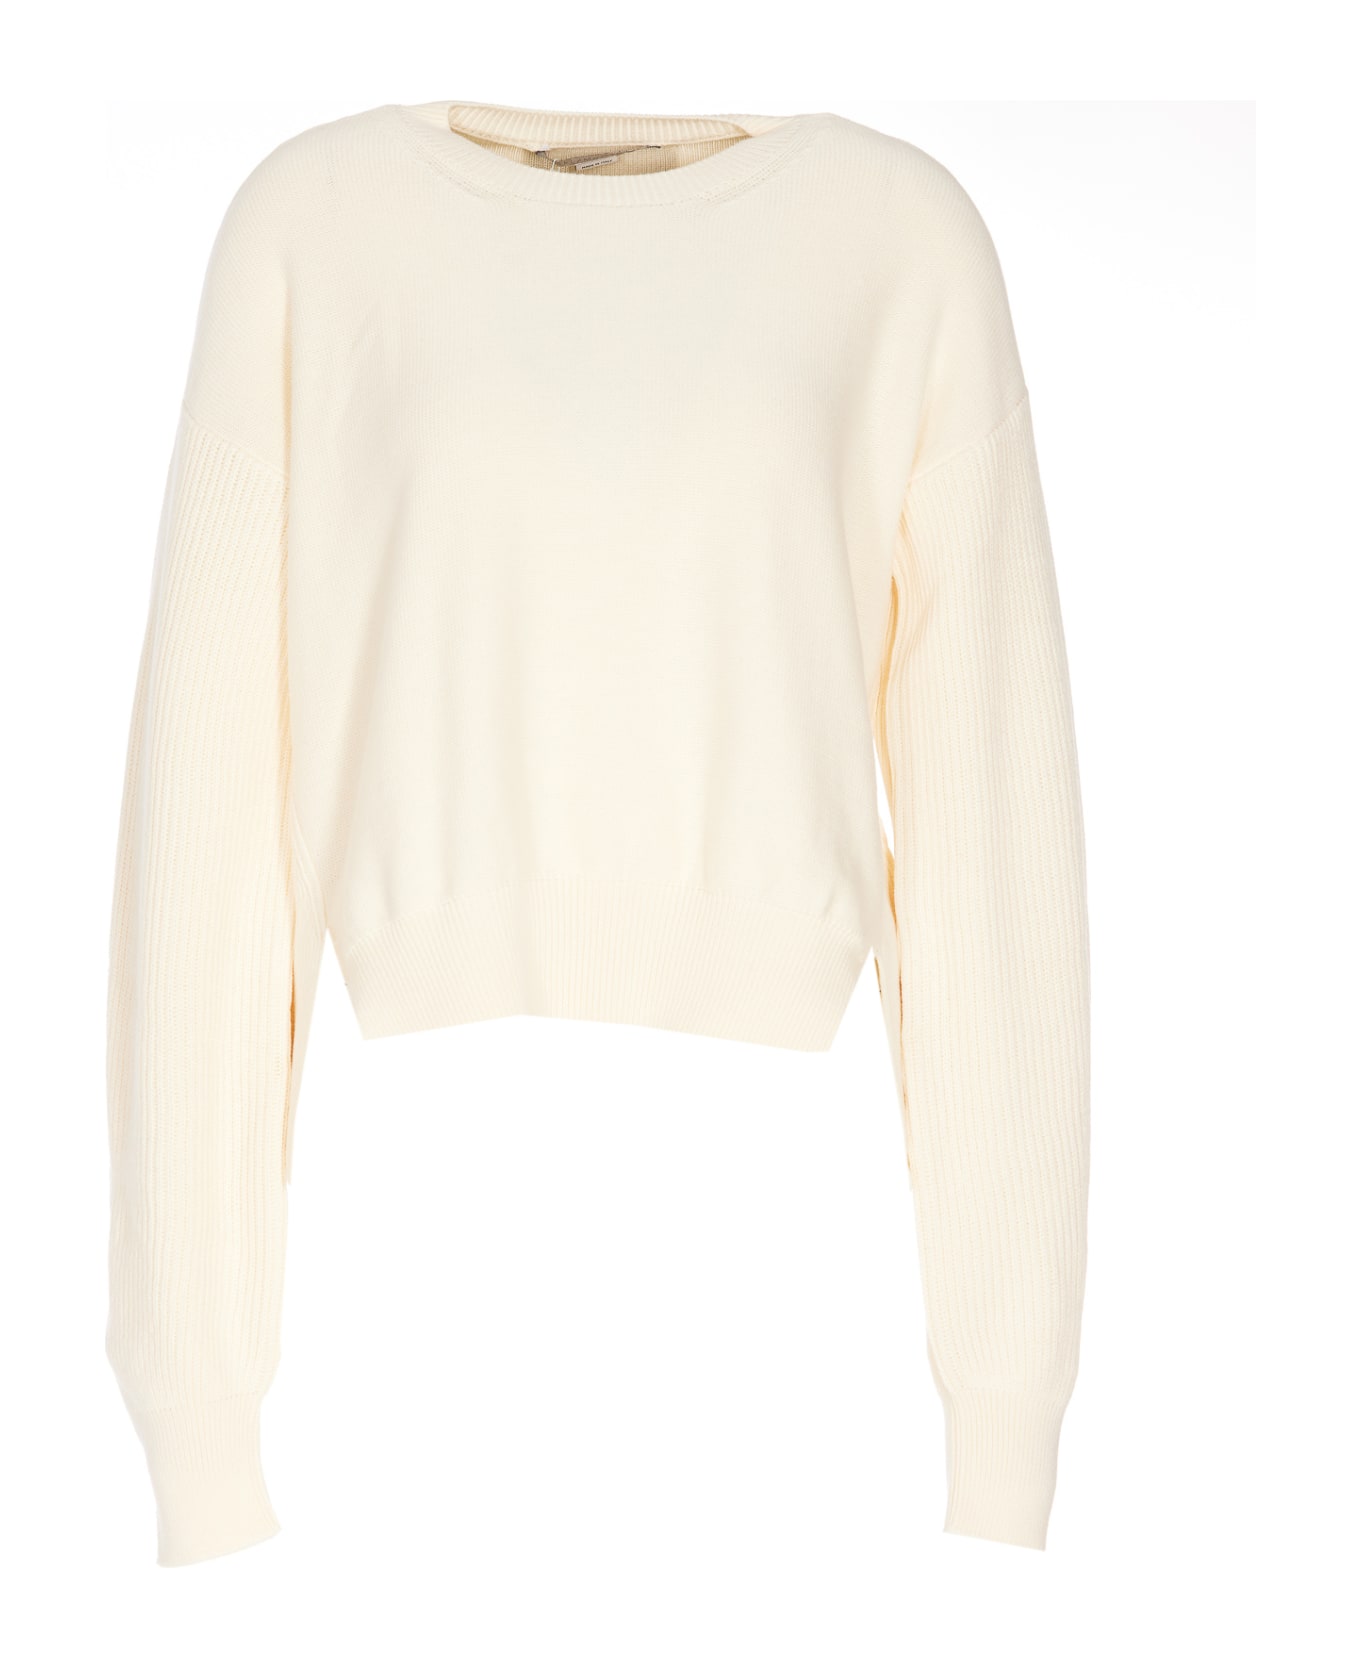 Stella McCartney Elevated Sweater - White